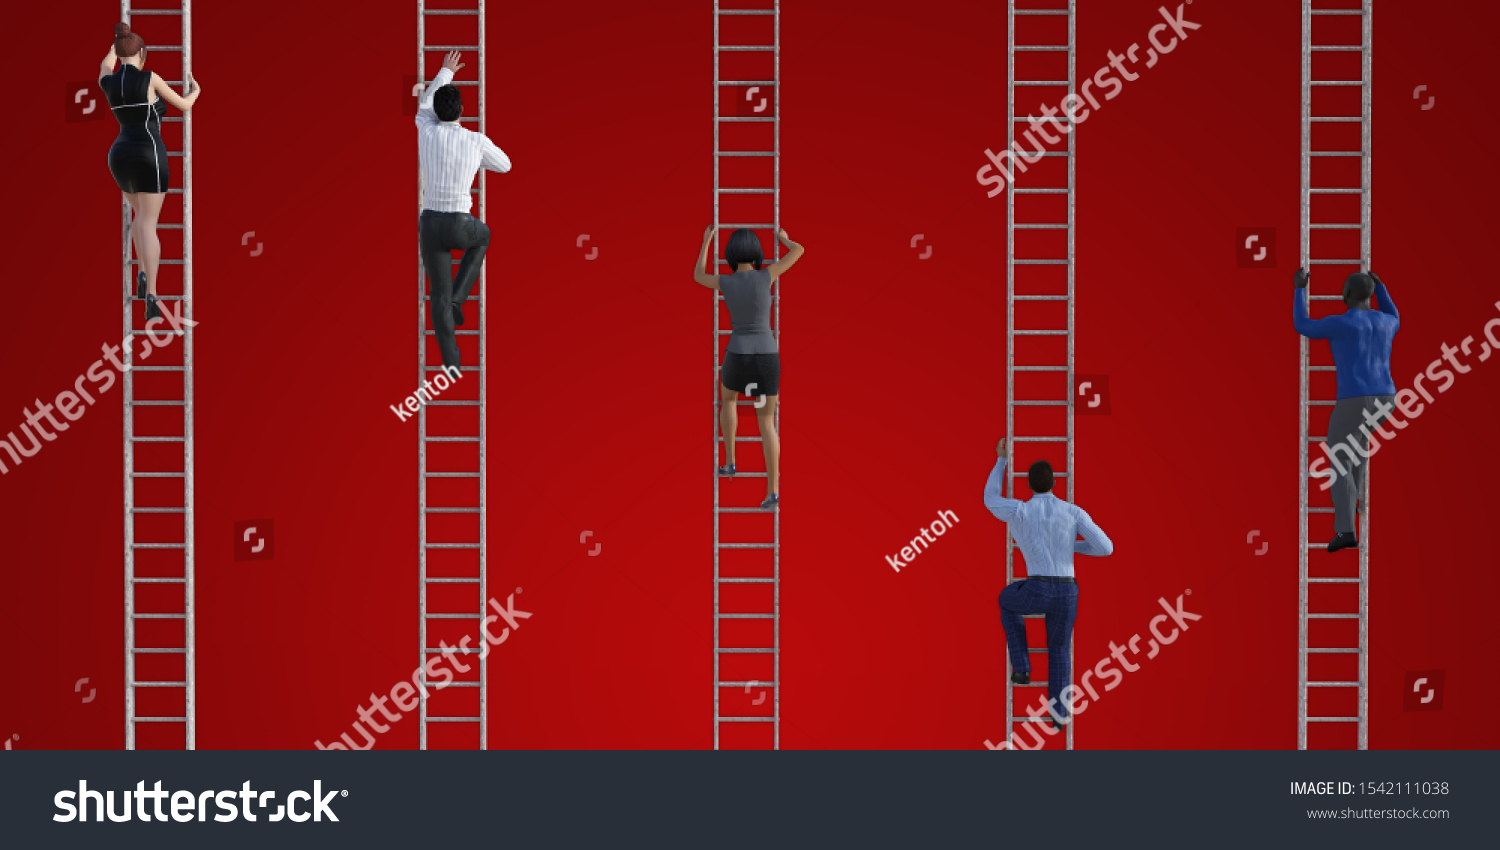 Climbing Corporate Ladder Business Concept 3d Stock Illustration 1542111038 Shutterstock